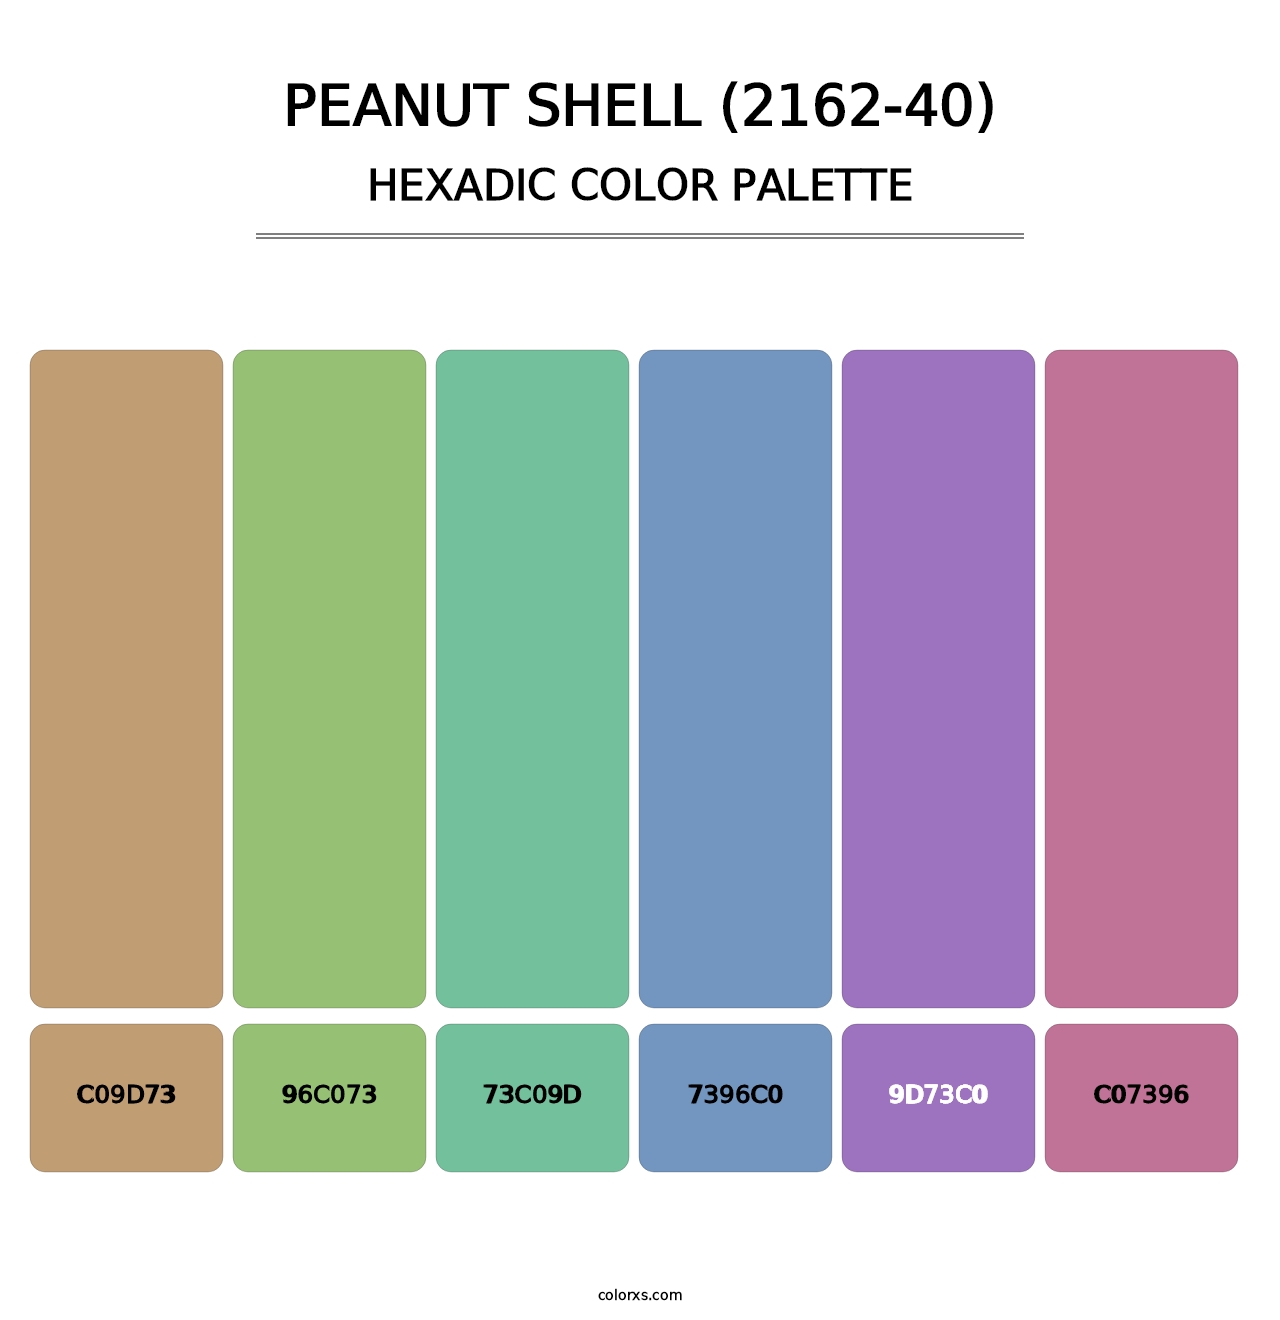 Peanut Shell (2162-40) - Hexadic Color Palette